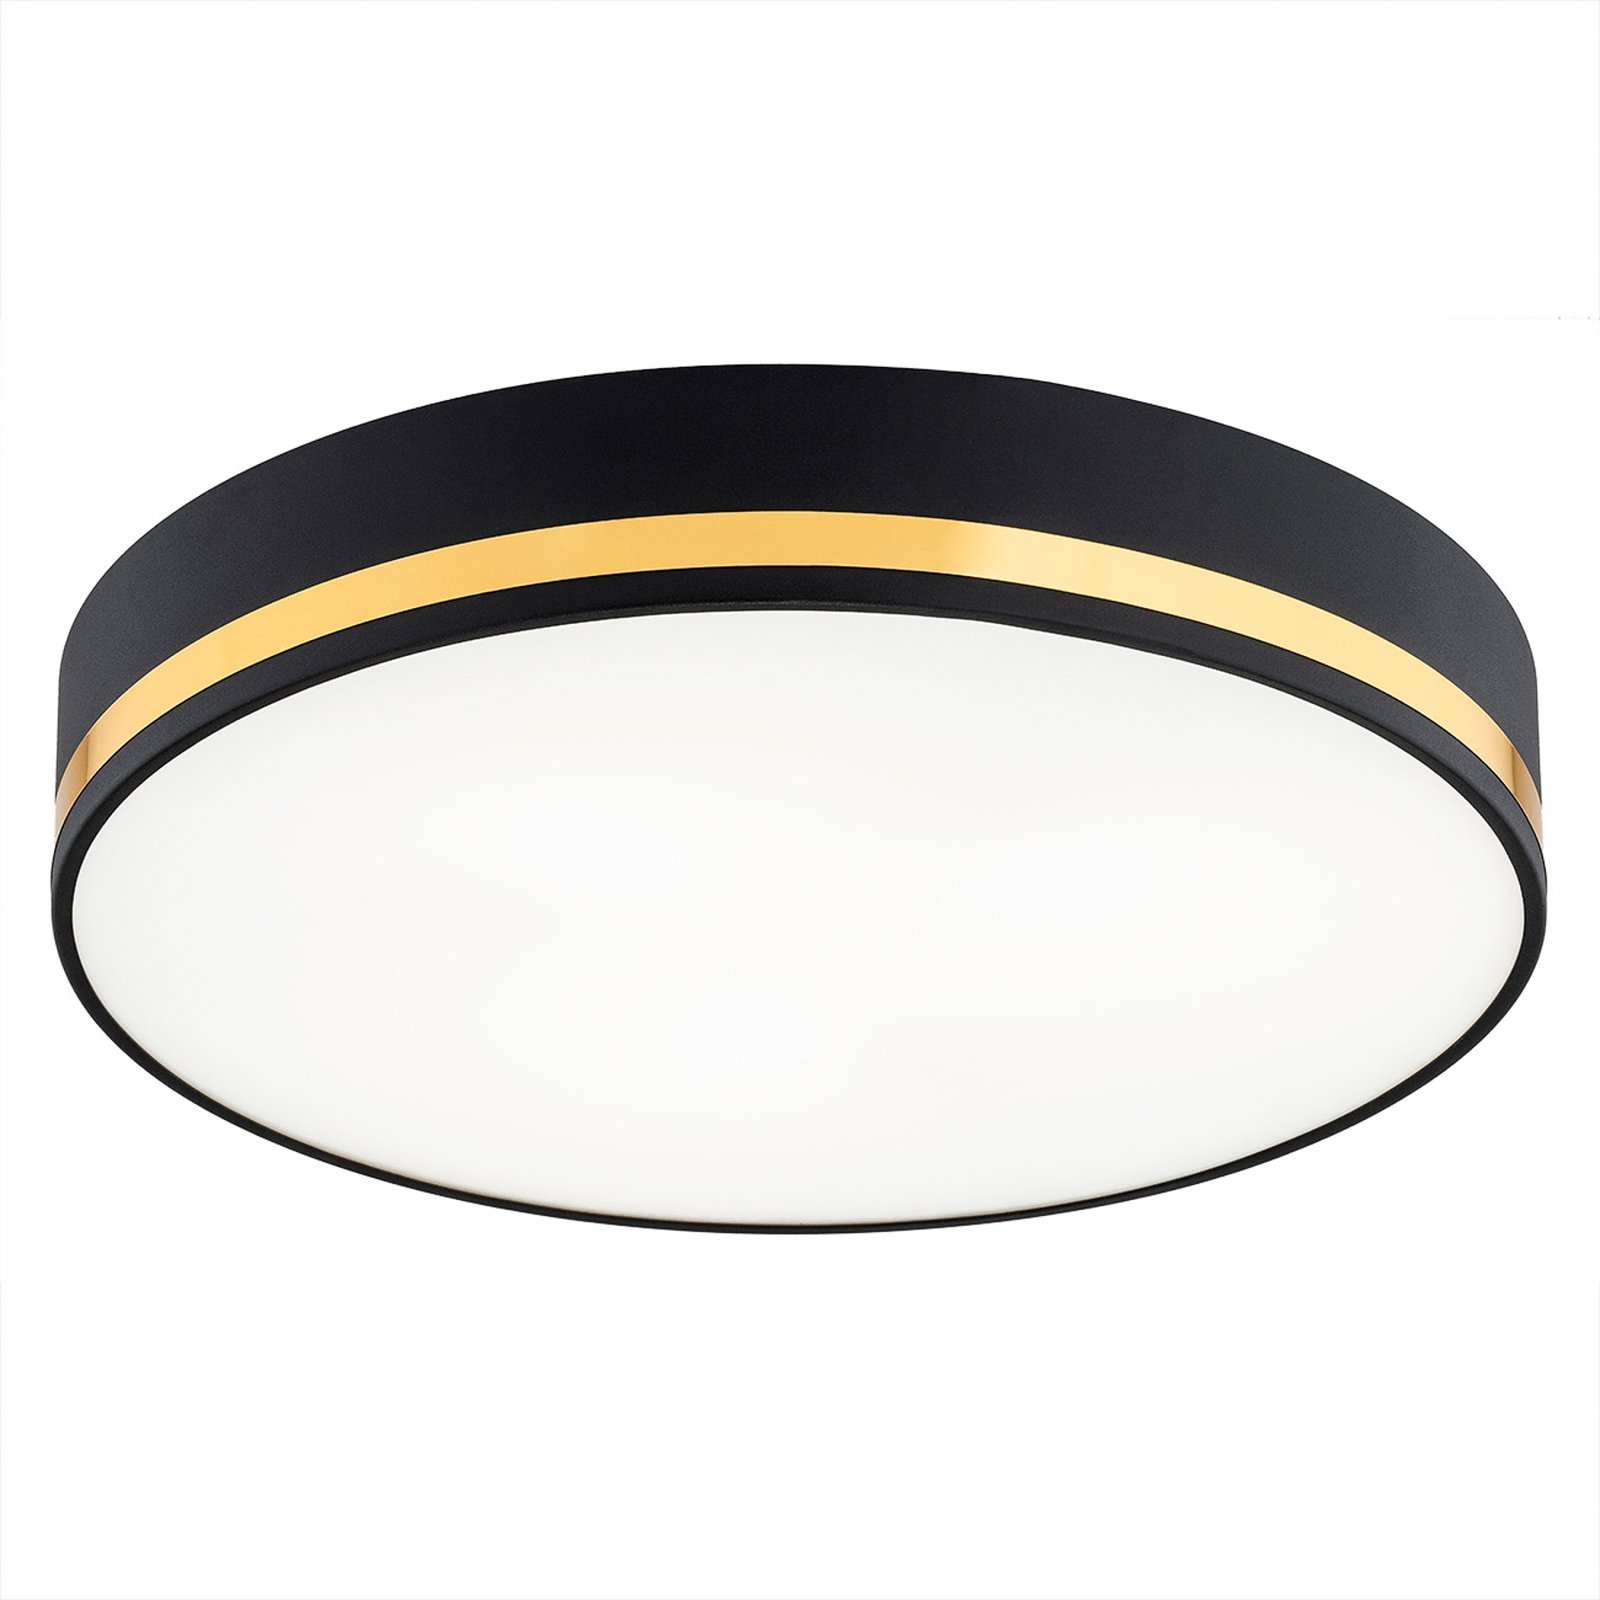 Plafondlamp Amore, goudkleurig gestreept, zwart, Ø 35cm